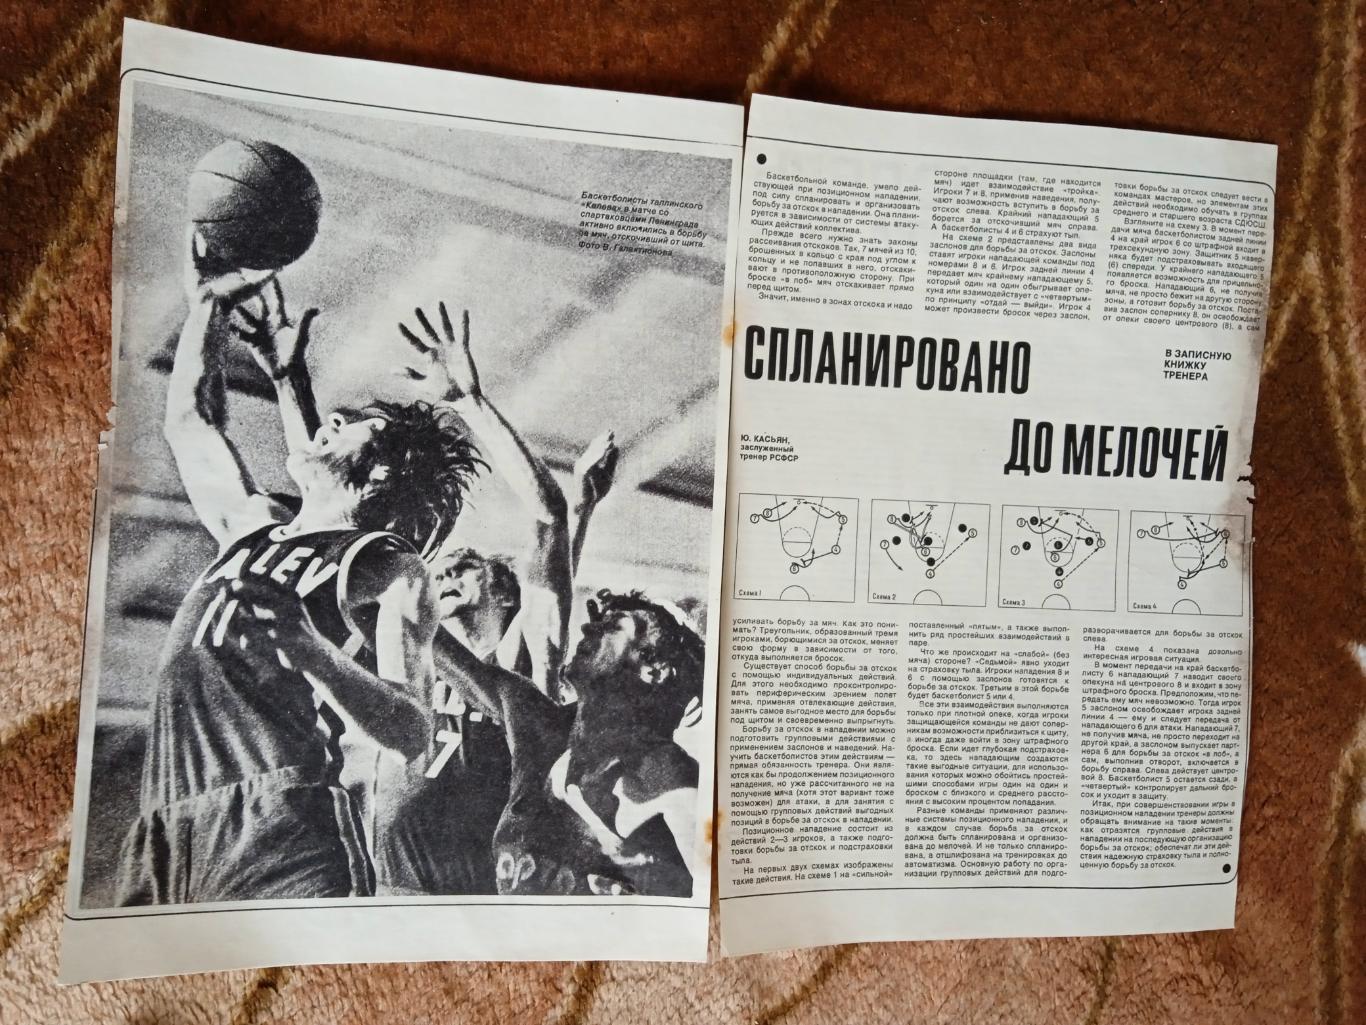 Статья.Фото.Баскетбол.Спланировано до мелочей.Журнал СИ 1978.